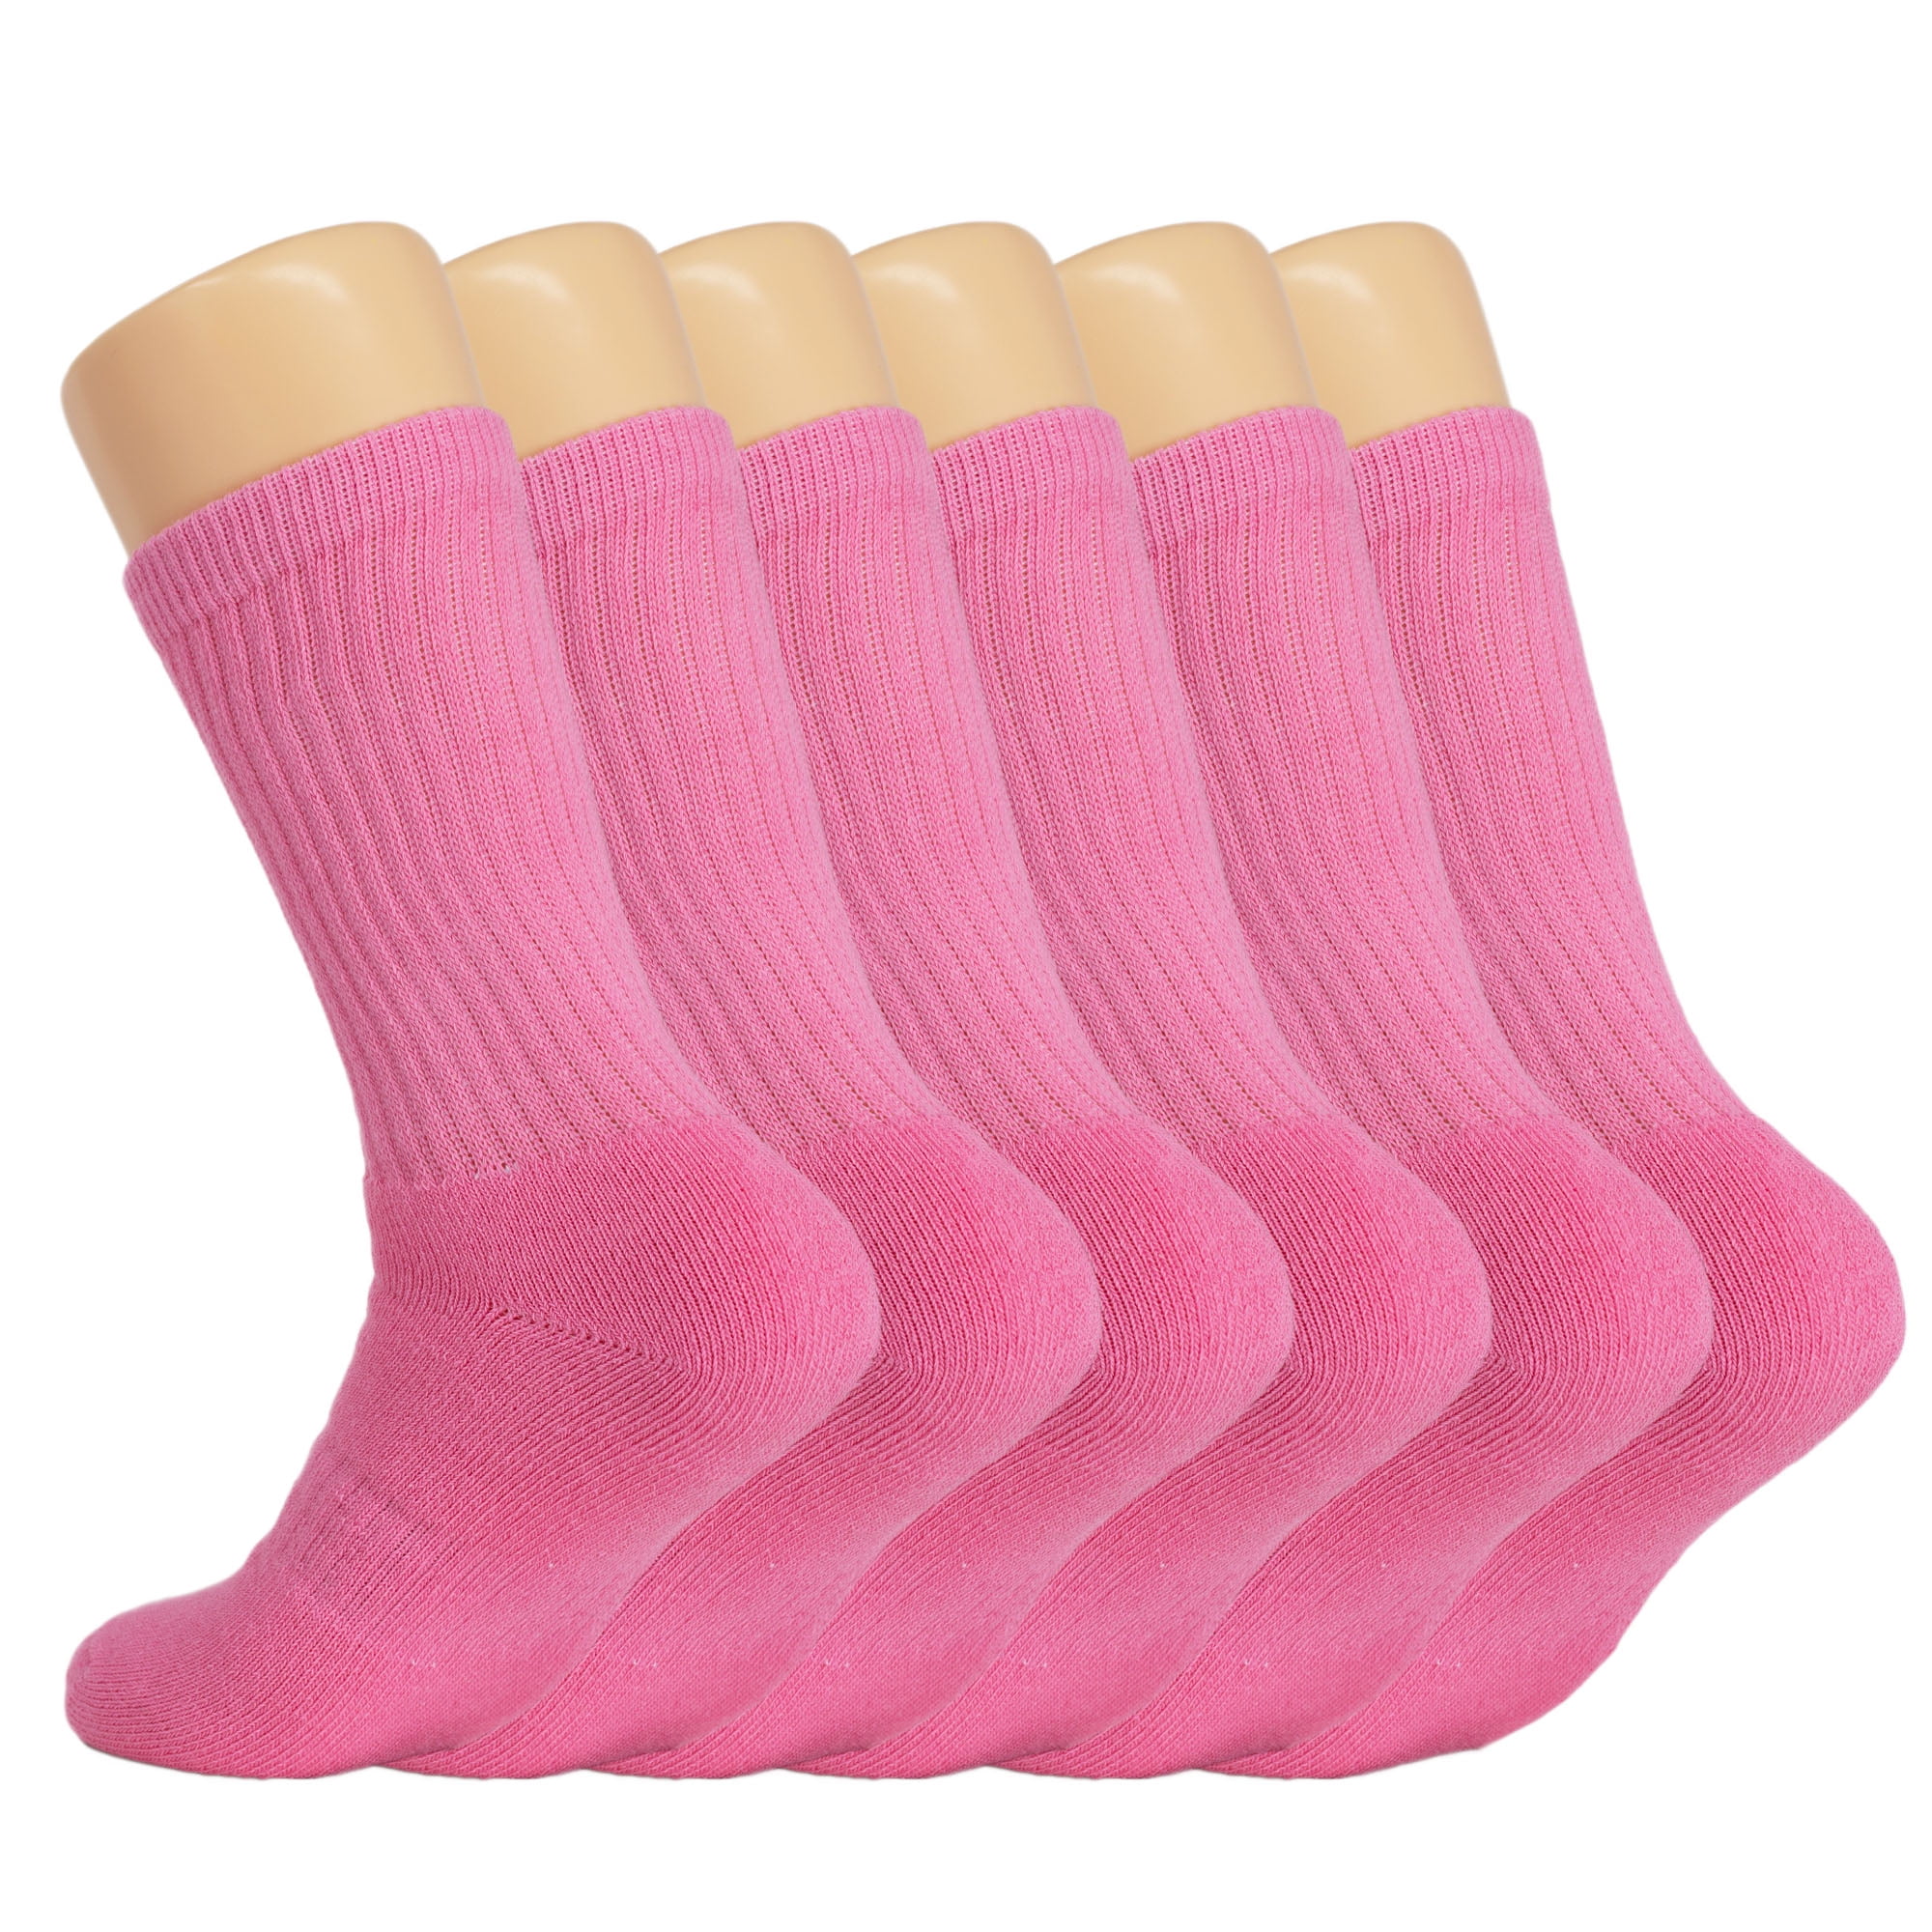 Cotton Crew Socks for Women Pink 6 Pairs Size 10-13 - Walmart.com